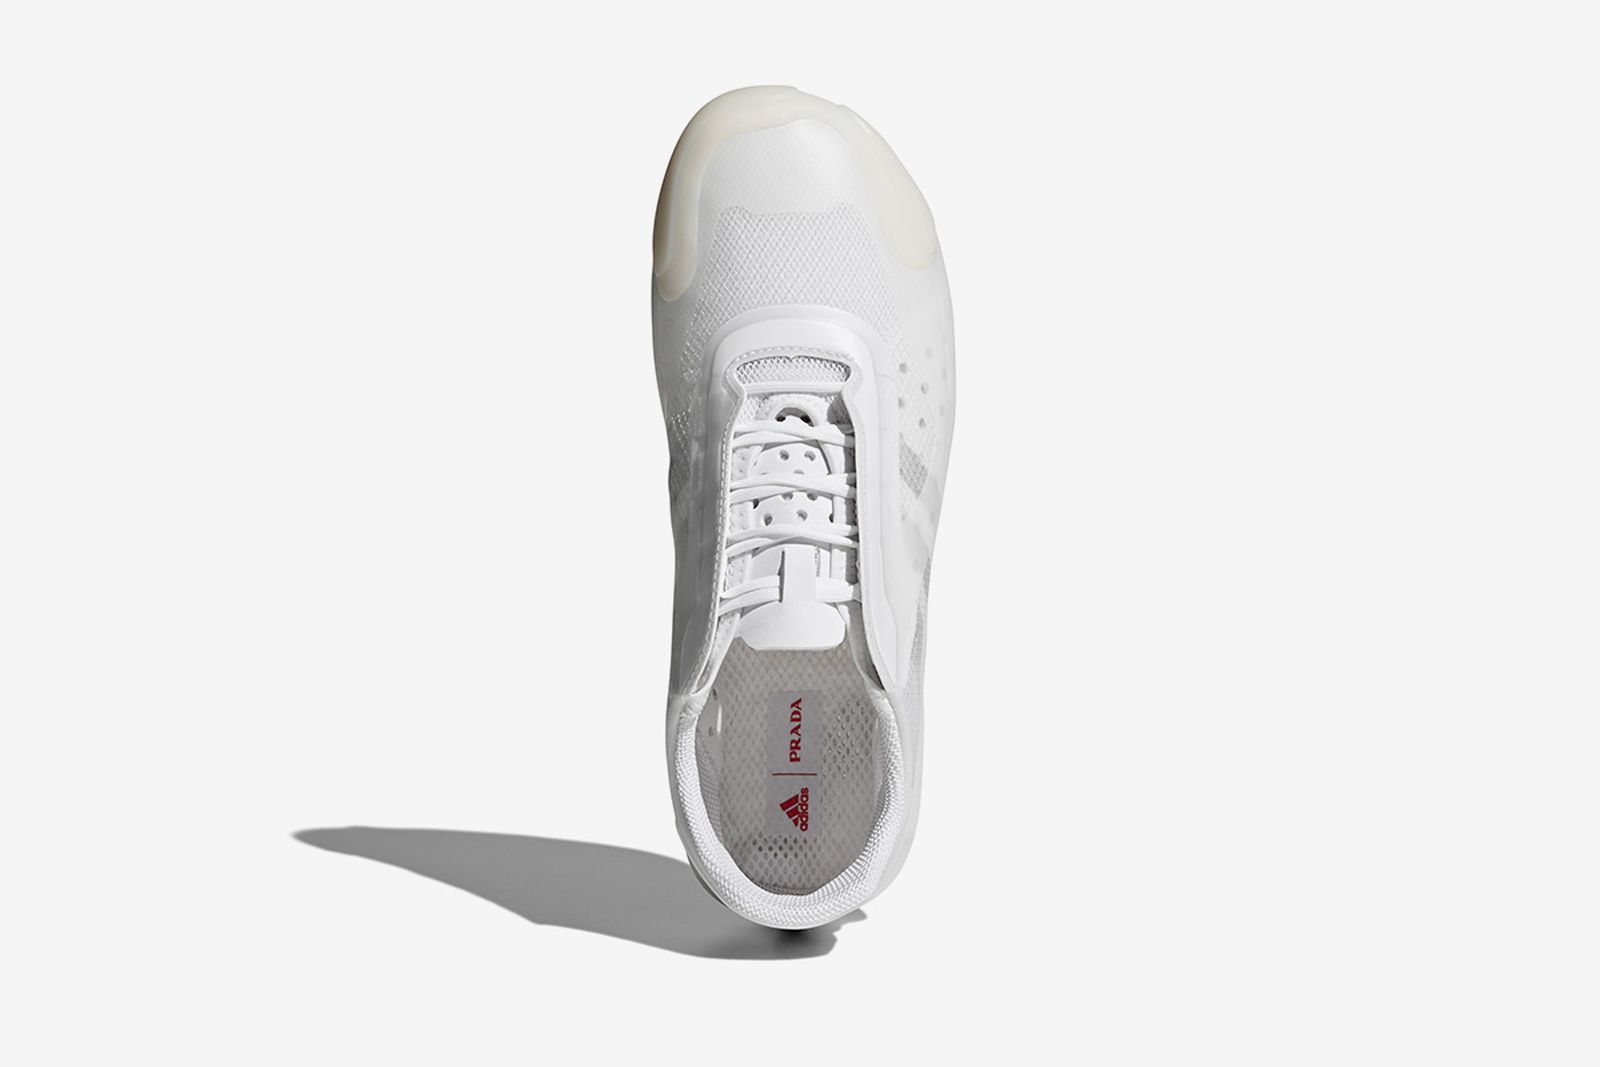 prada-adidas-ap-luna-rossa-21-release-date-price-03